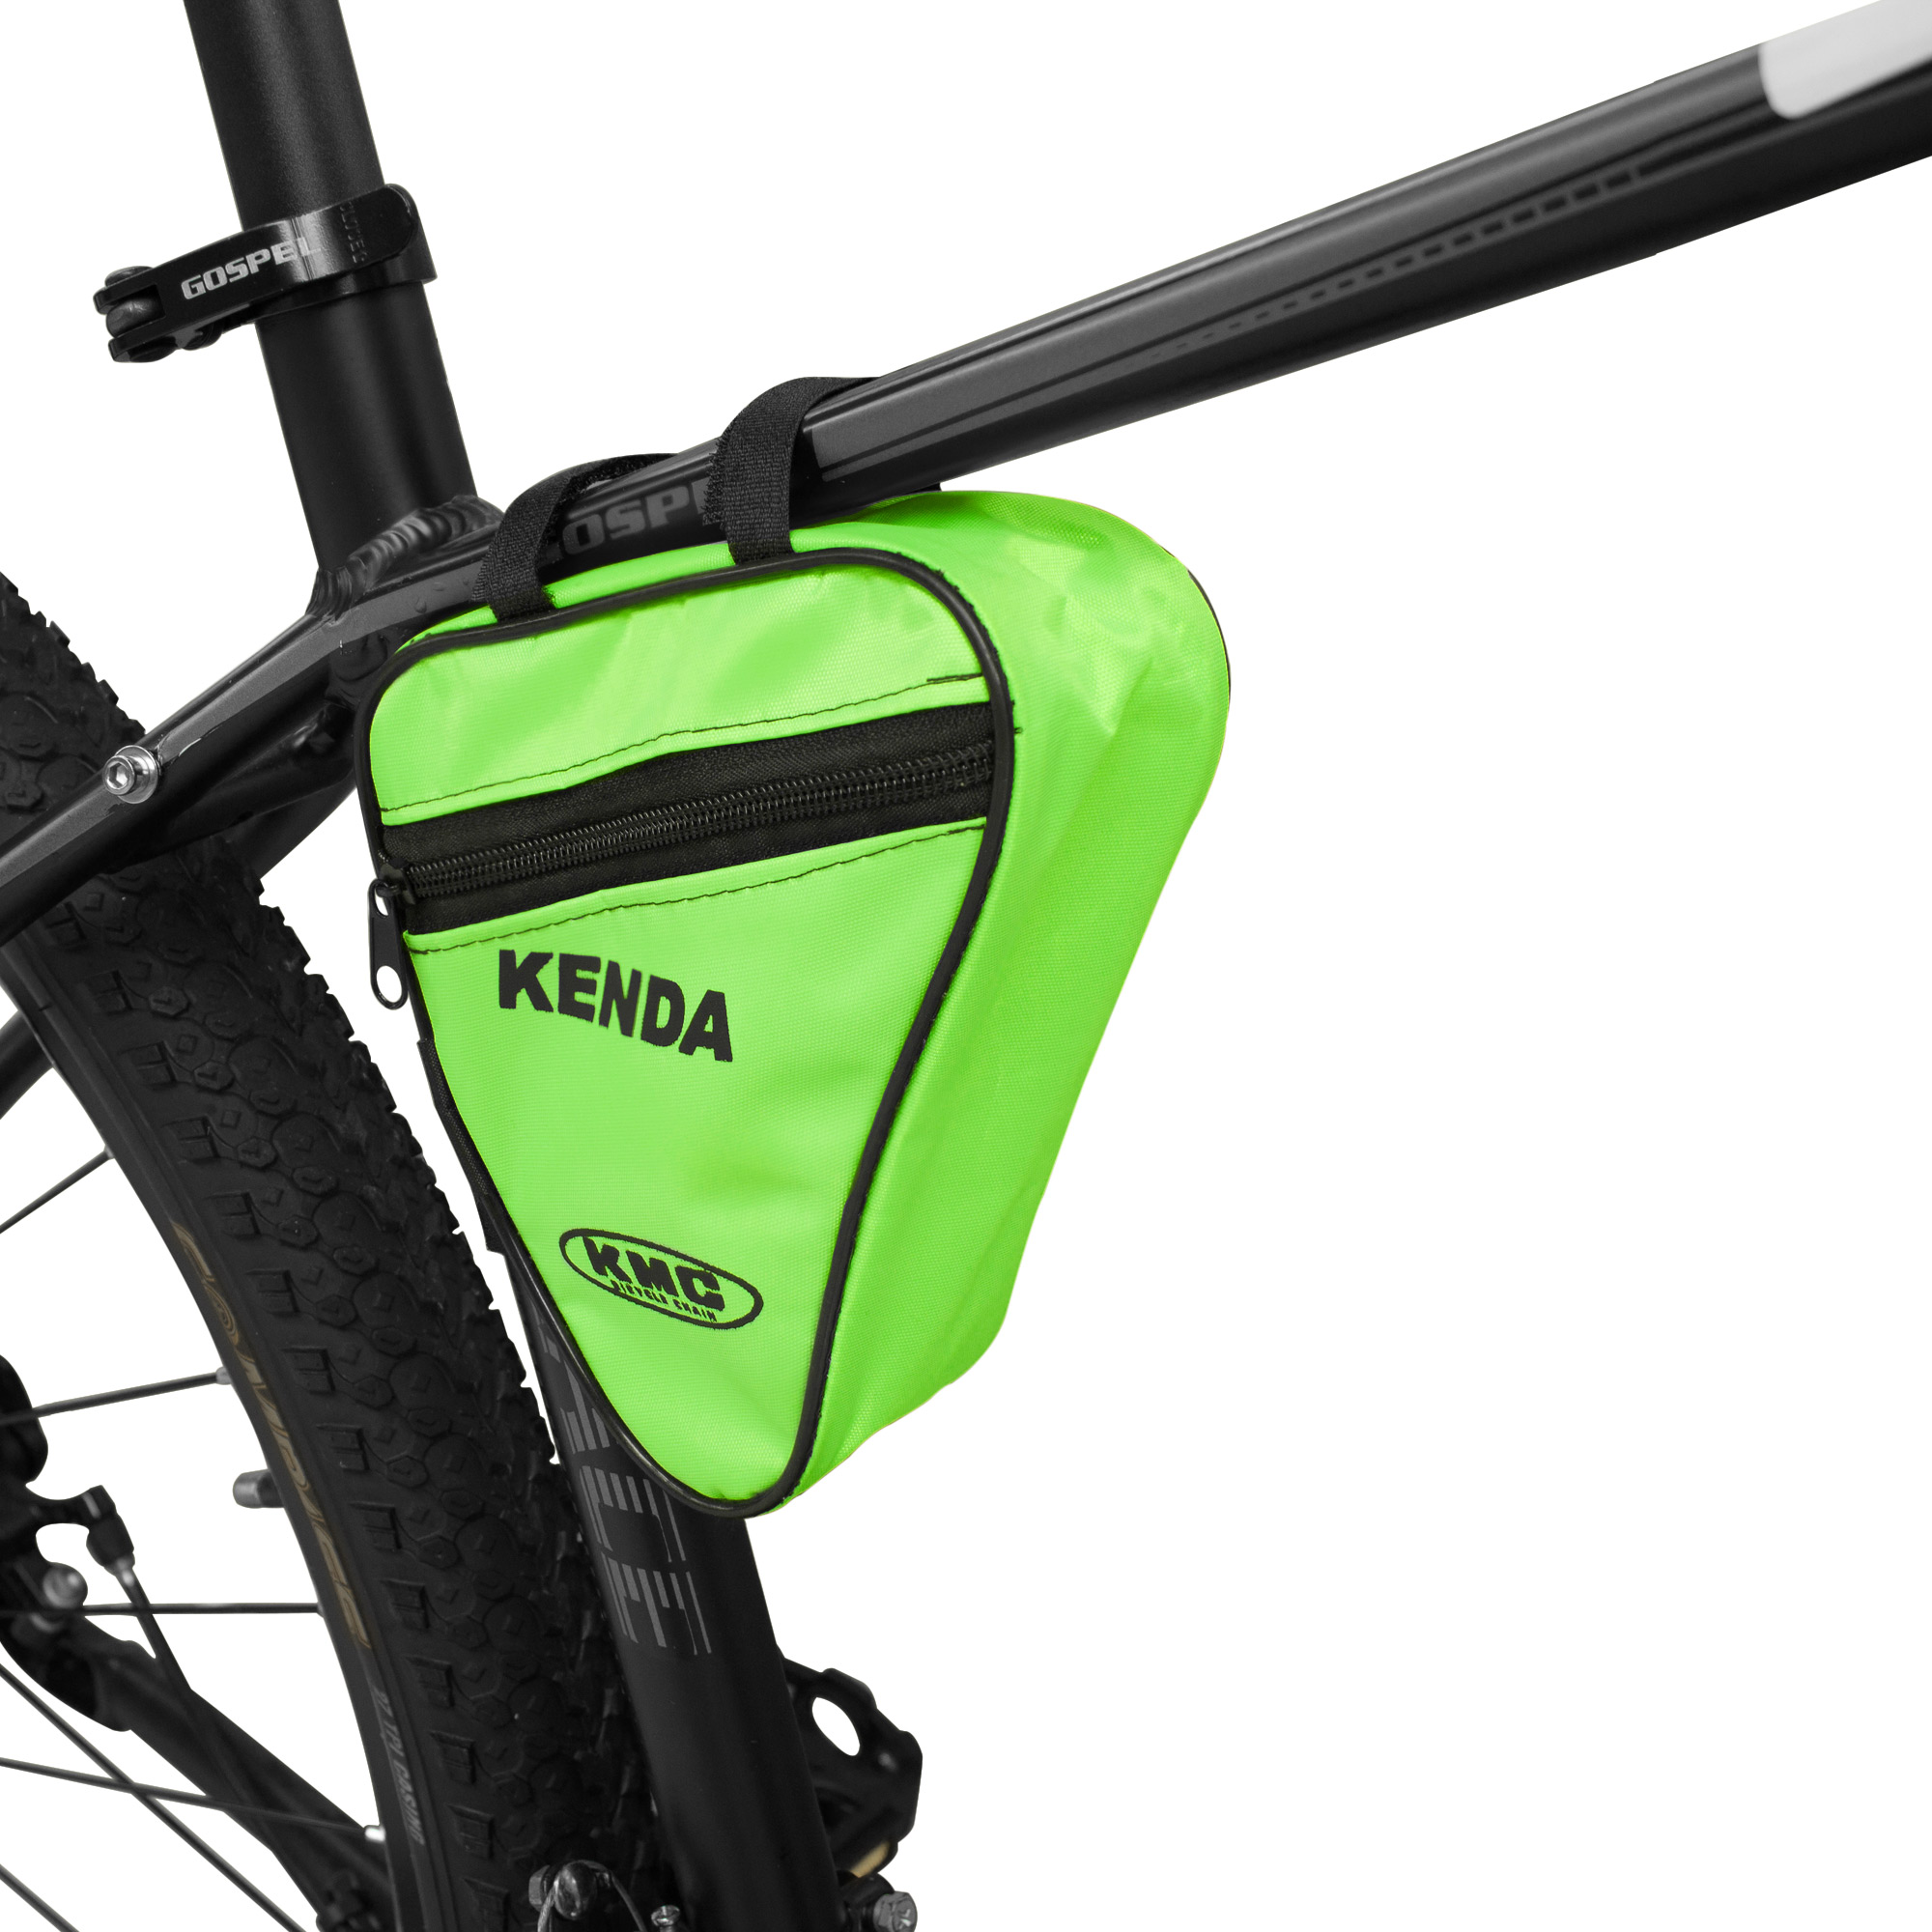 Ciclometa Detalles Bolsa porta herramienta para bicicleta mediana